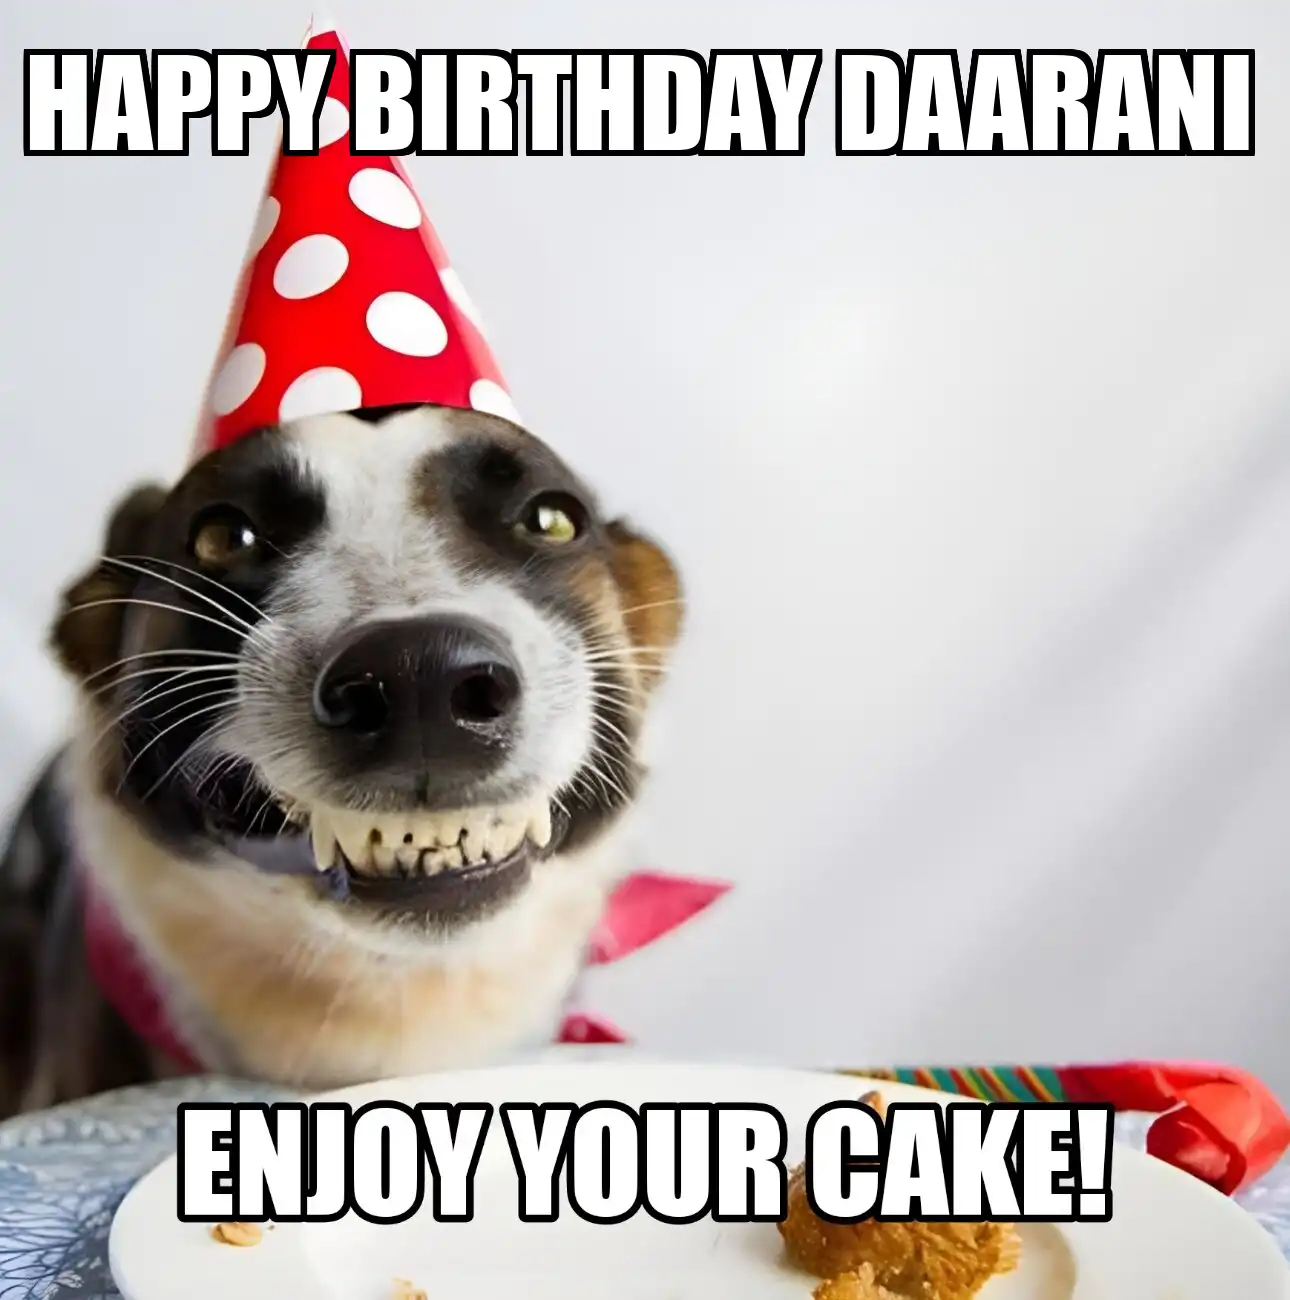 Happy Birthday Daarani Enjoy Your Cake Dog Meme